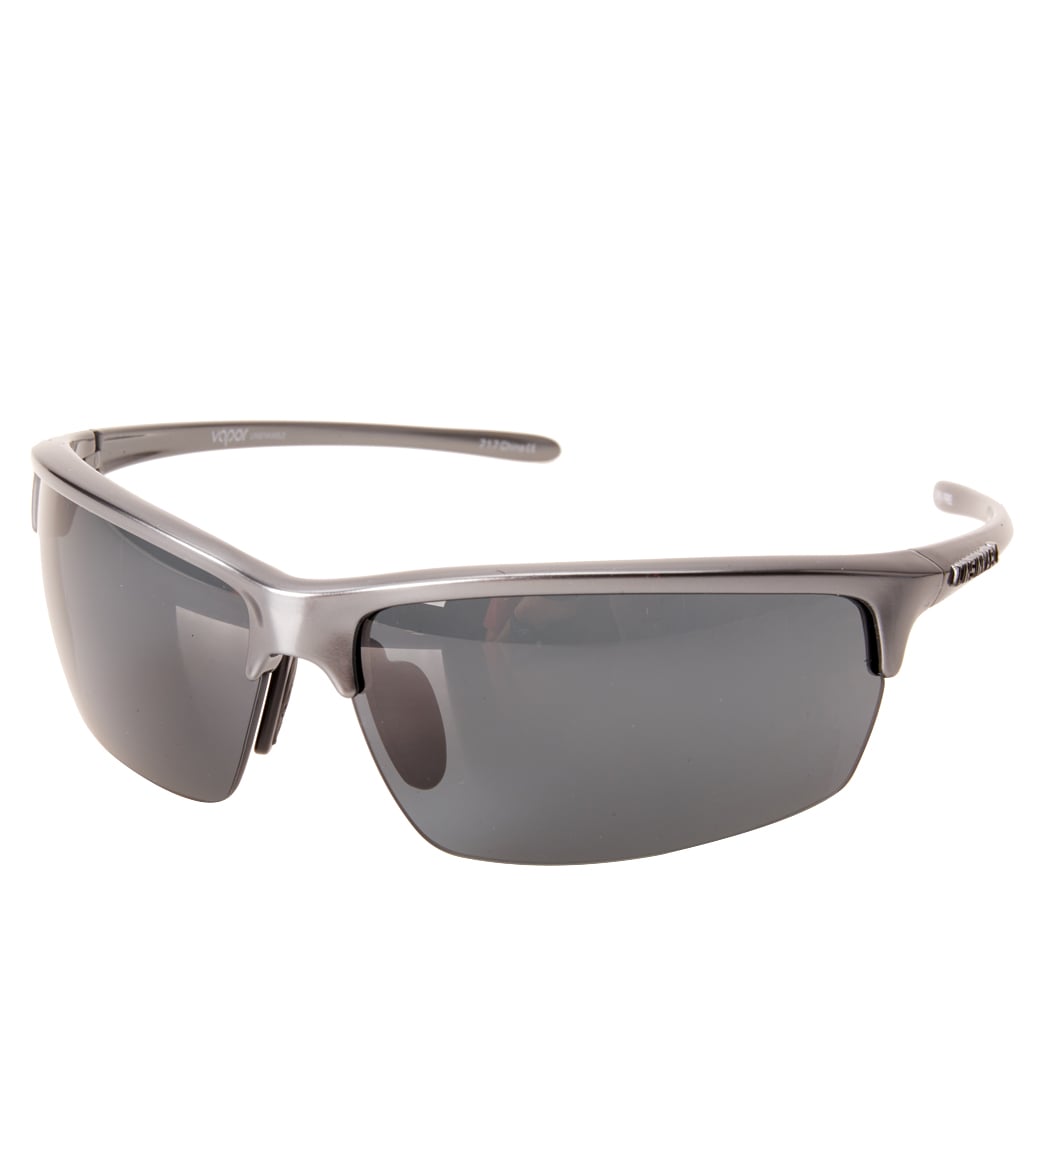 Unsinkable Polarized Vapor Floating Sunglasses - Gunmetal/Grey - Swimoutlet.com